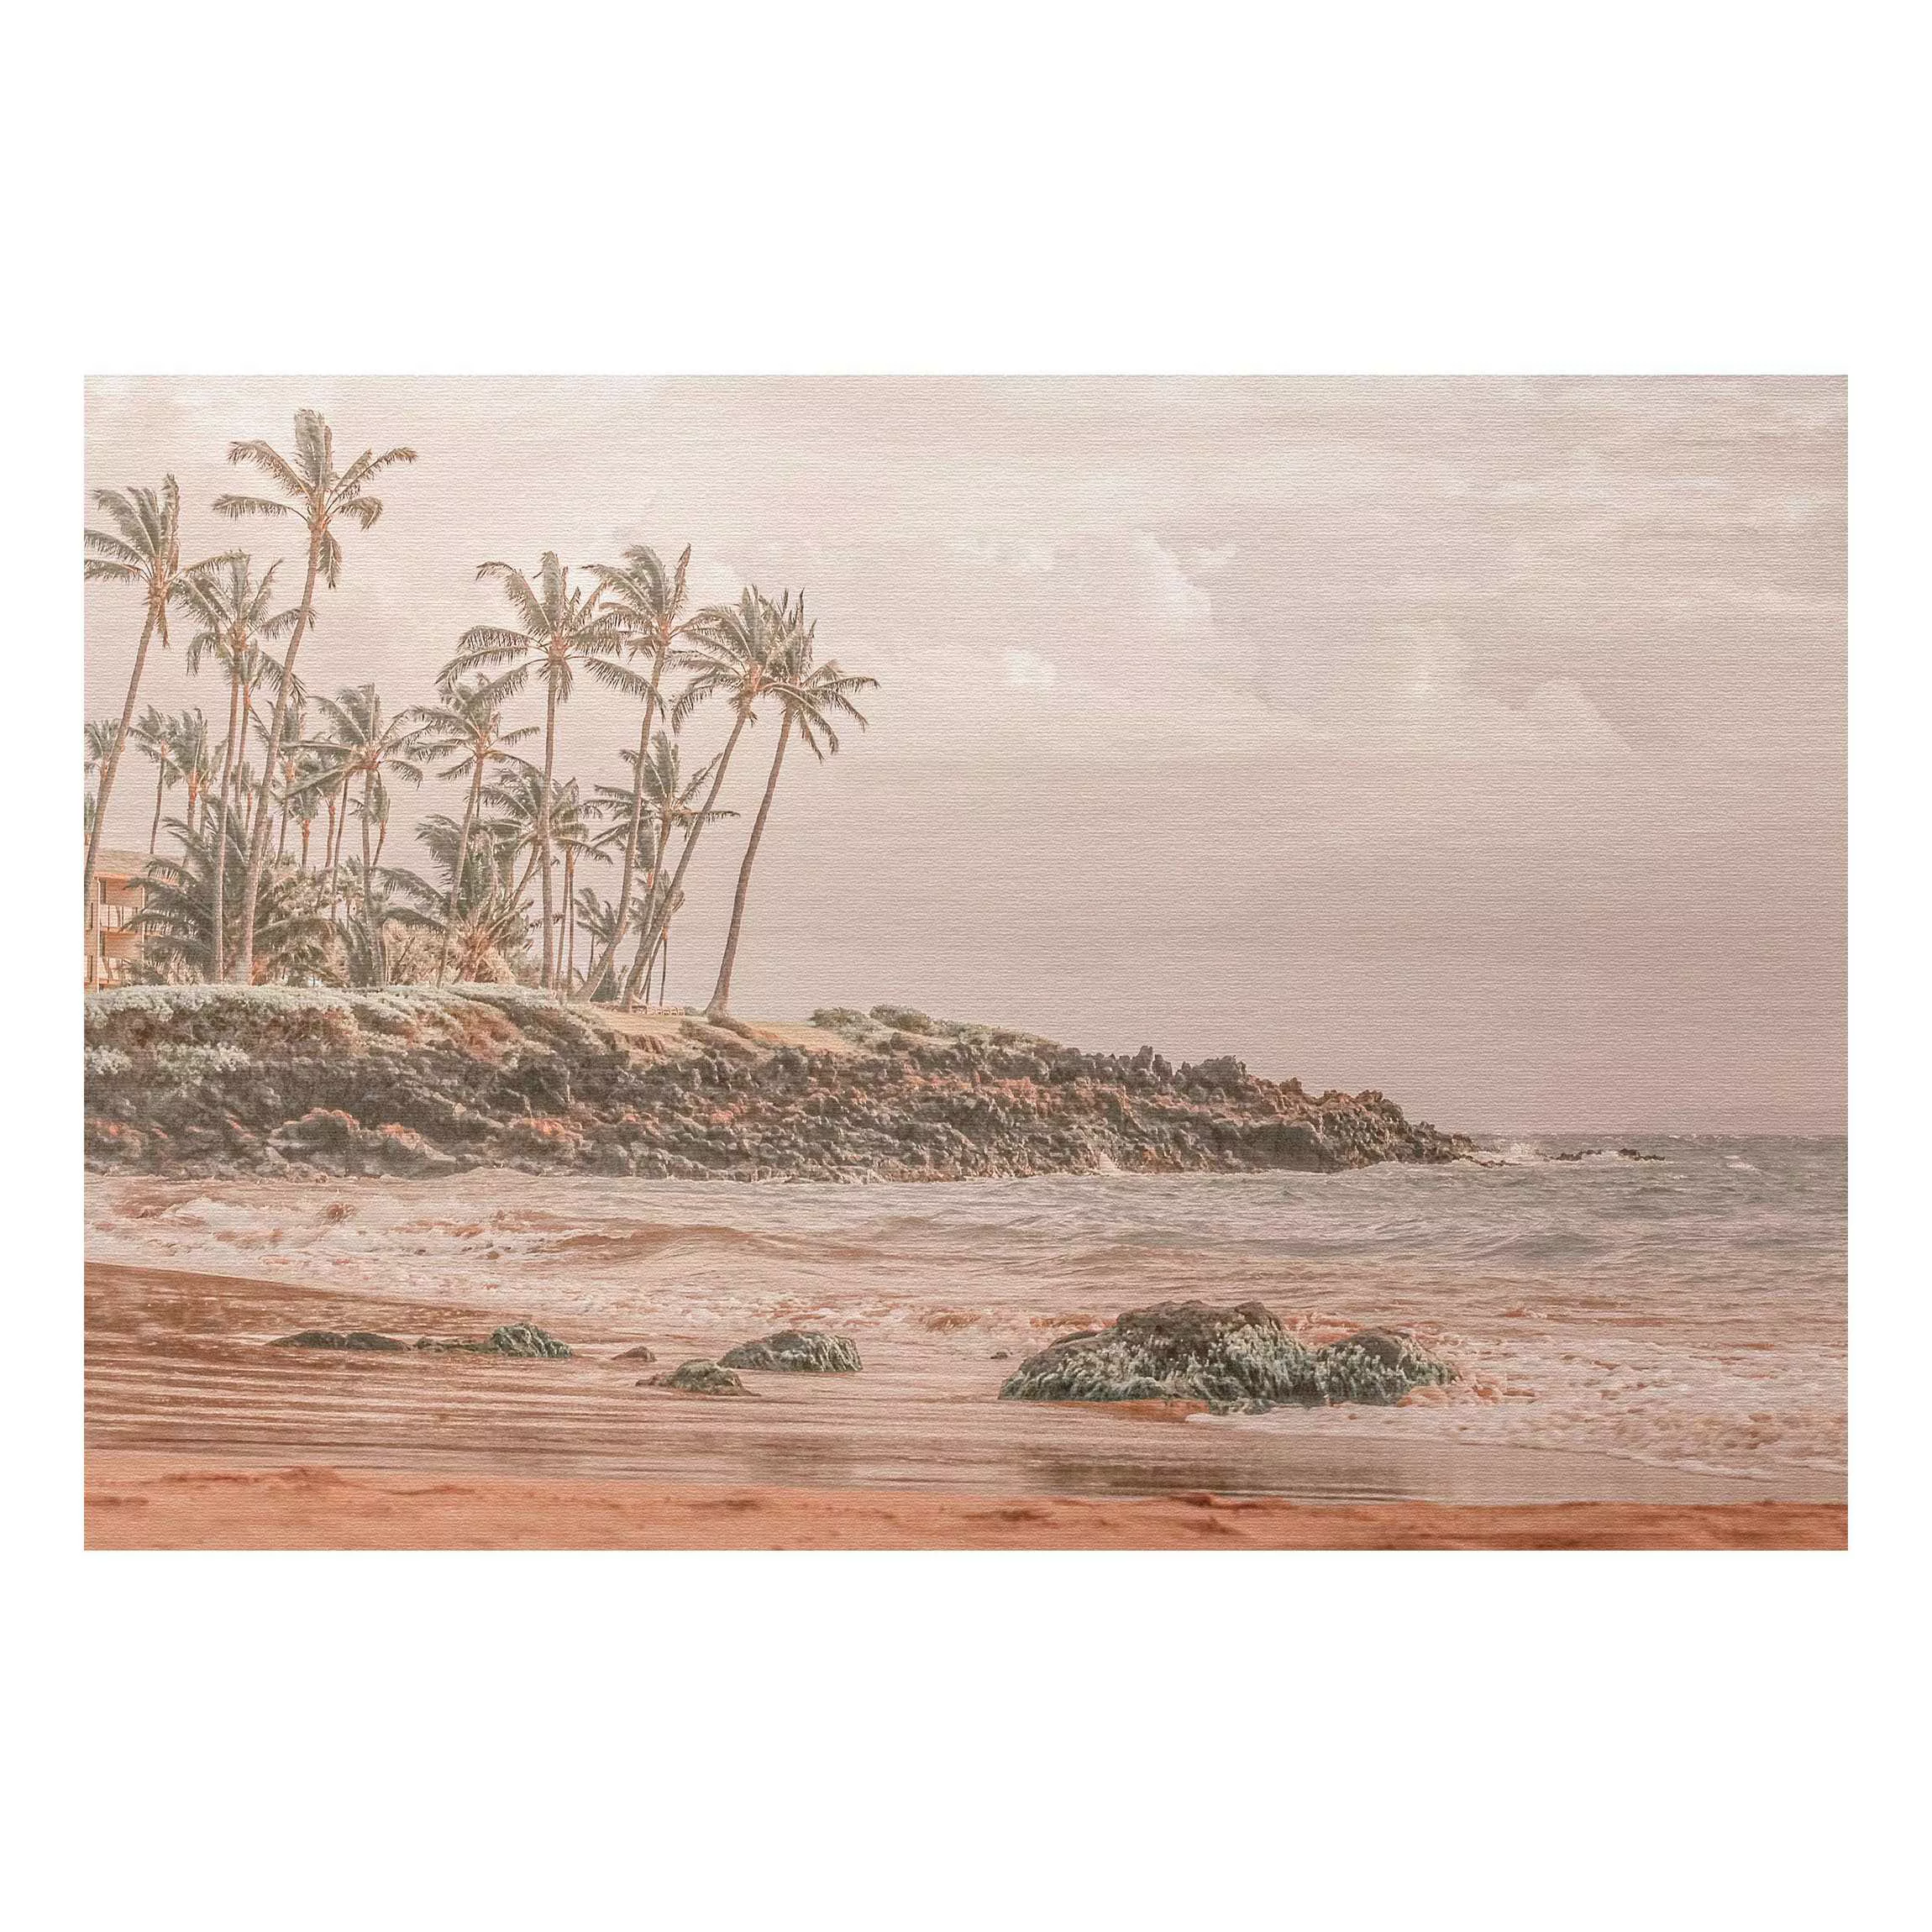 Alu-Dibond Bild Aloha Hawaii Strand günstig online kaufen